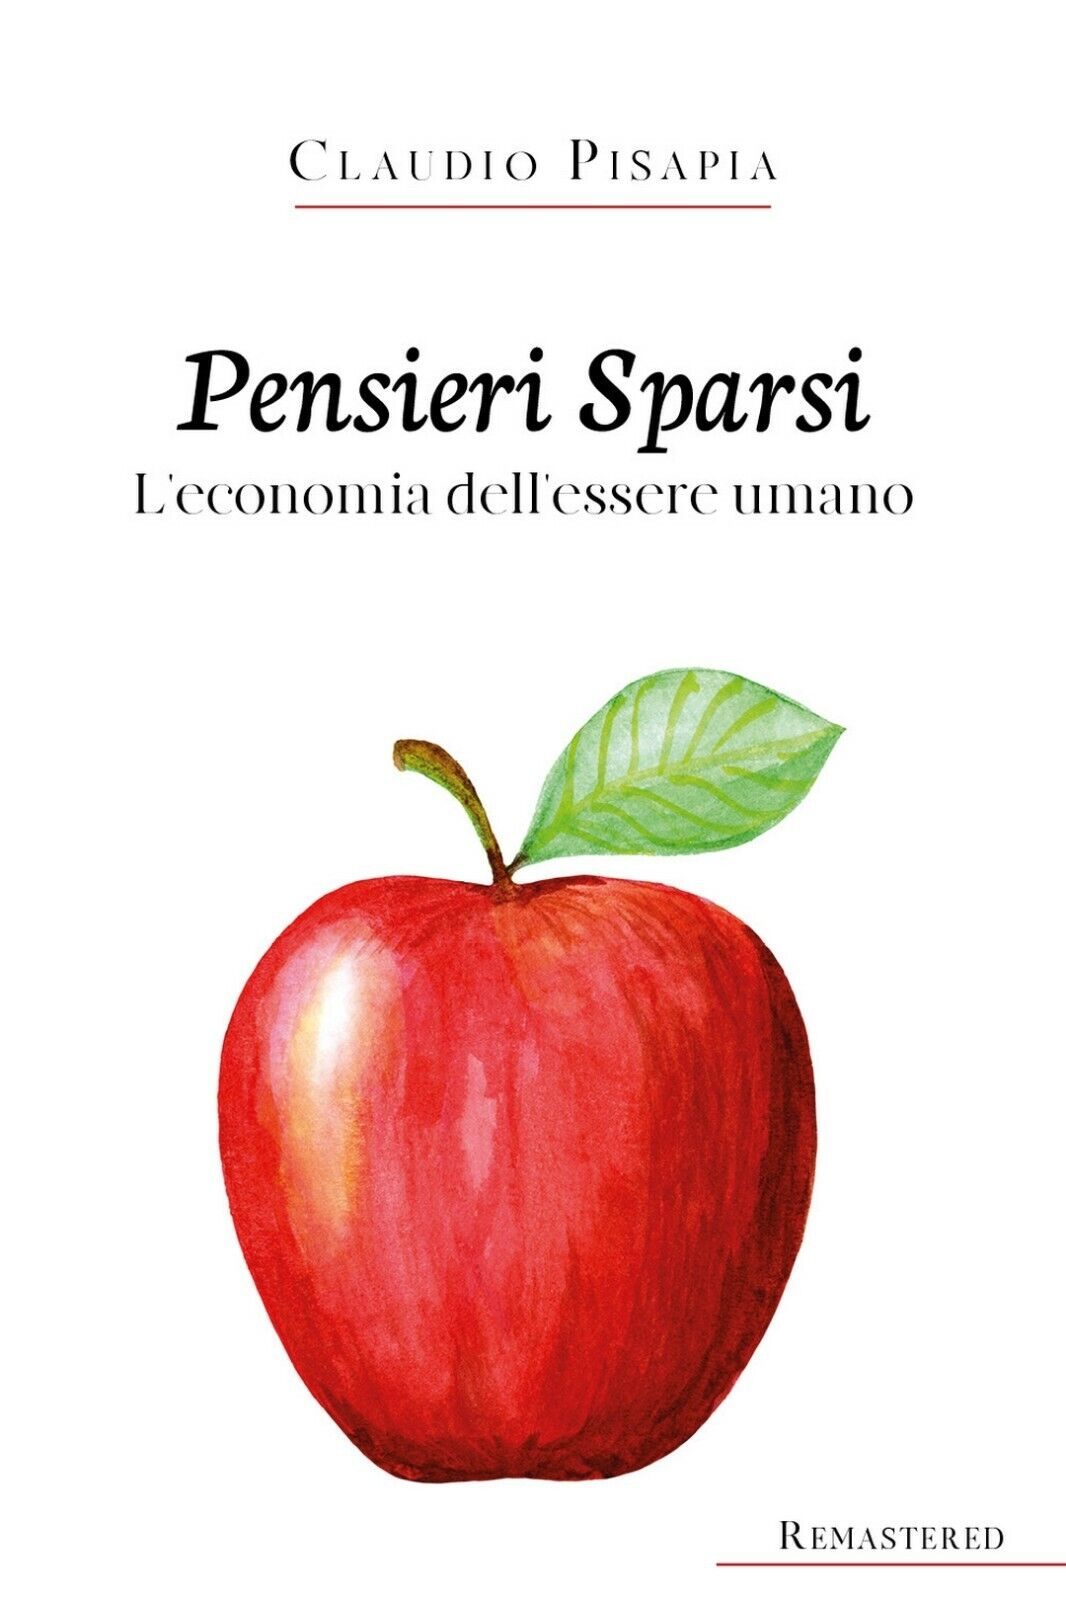 Pensieri Sparsi. L'economia delL'essere umano, Claudio Pisapia,  2020,  Youcanp.